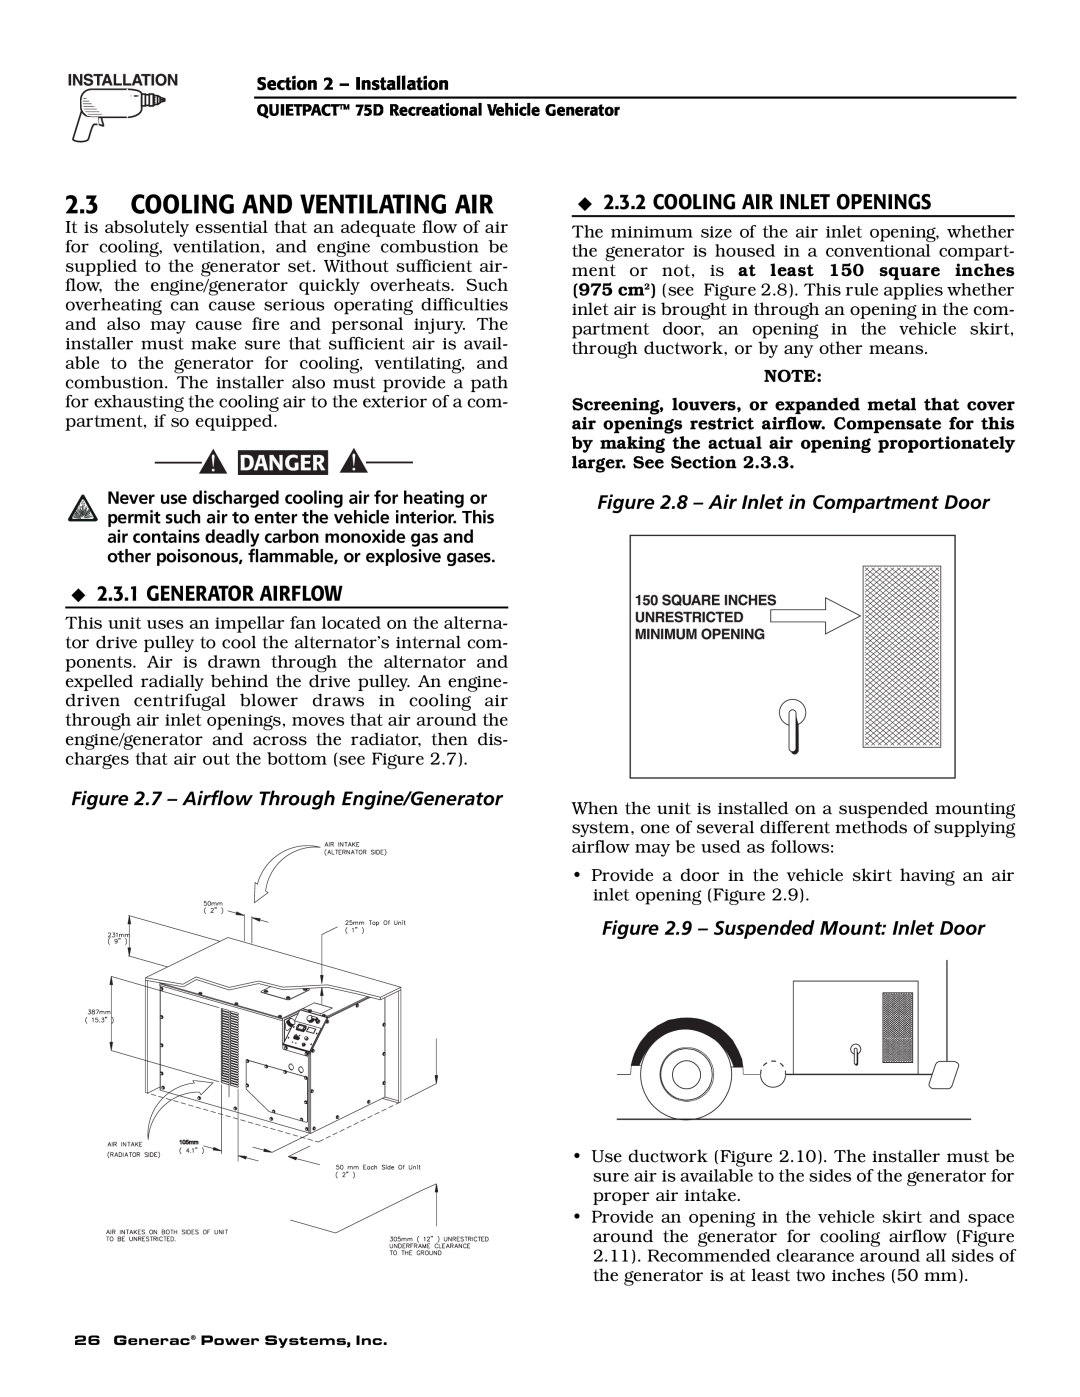 Guardian Technologies 004270-2 Cooling And Ventilating Air, Cooling Air Inlet Openings, Generator Airflow, Danger 